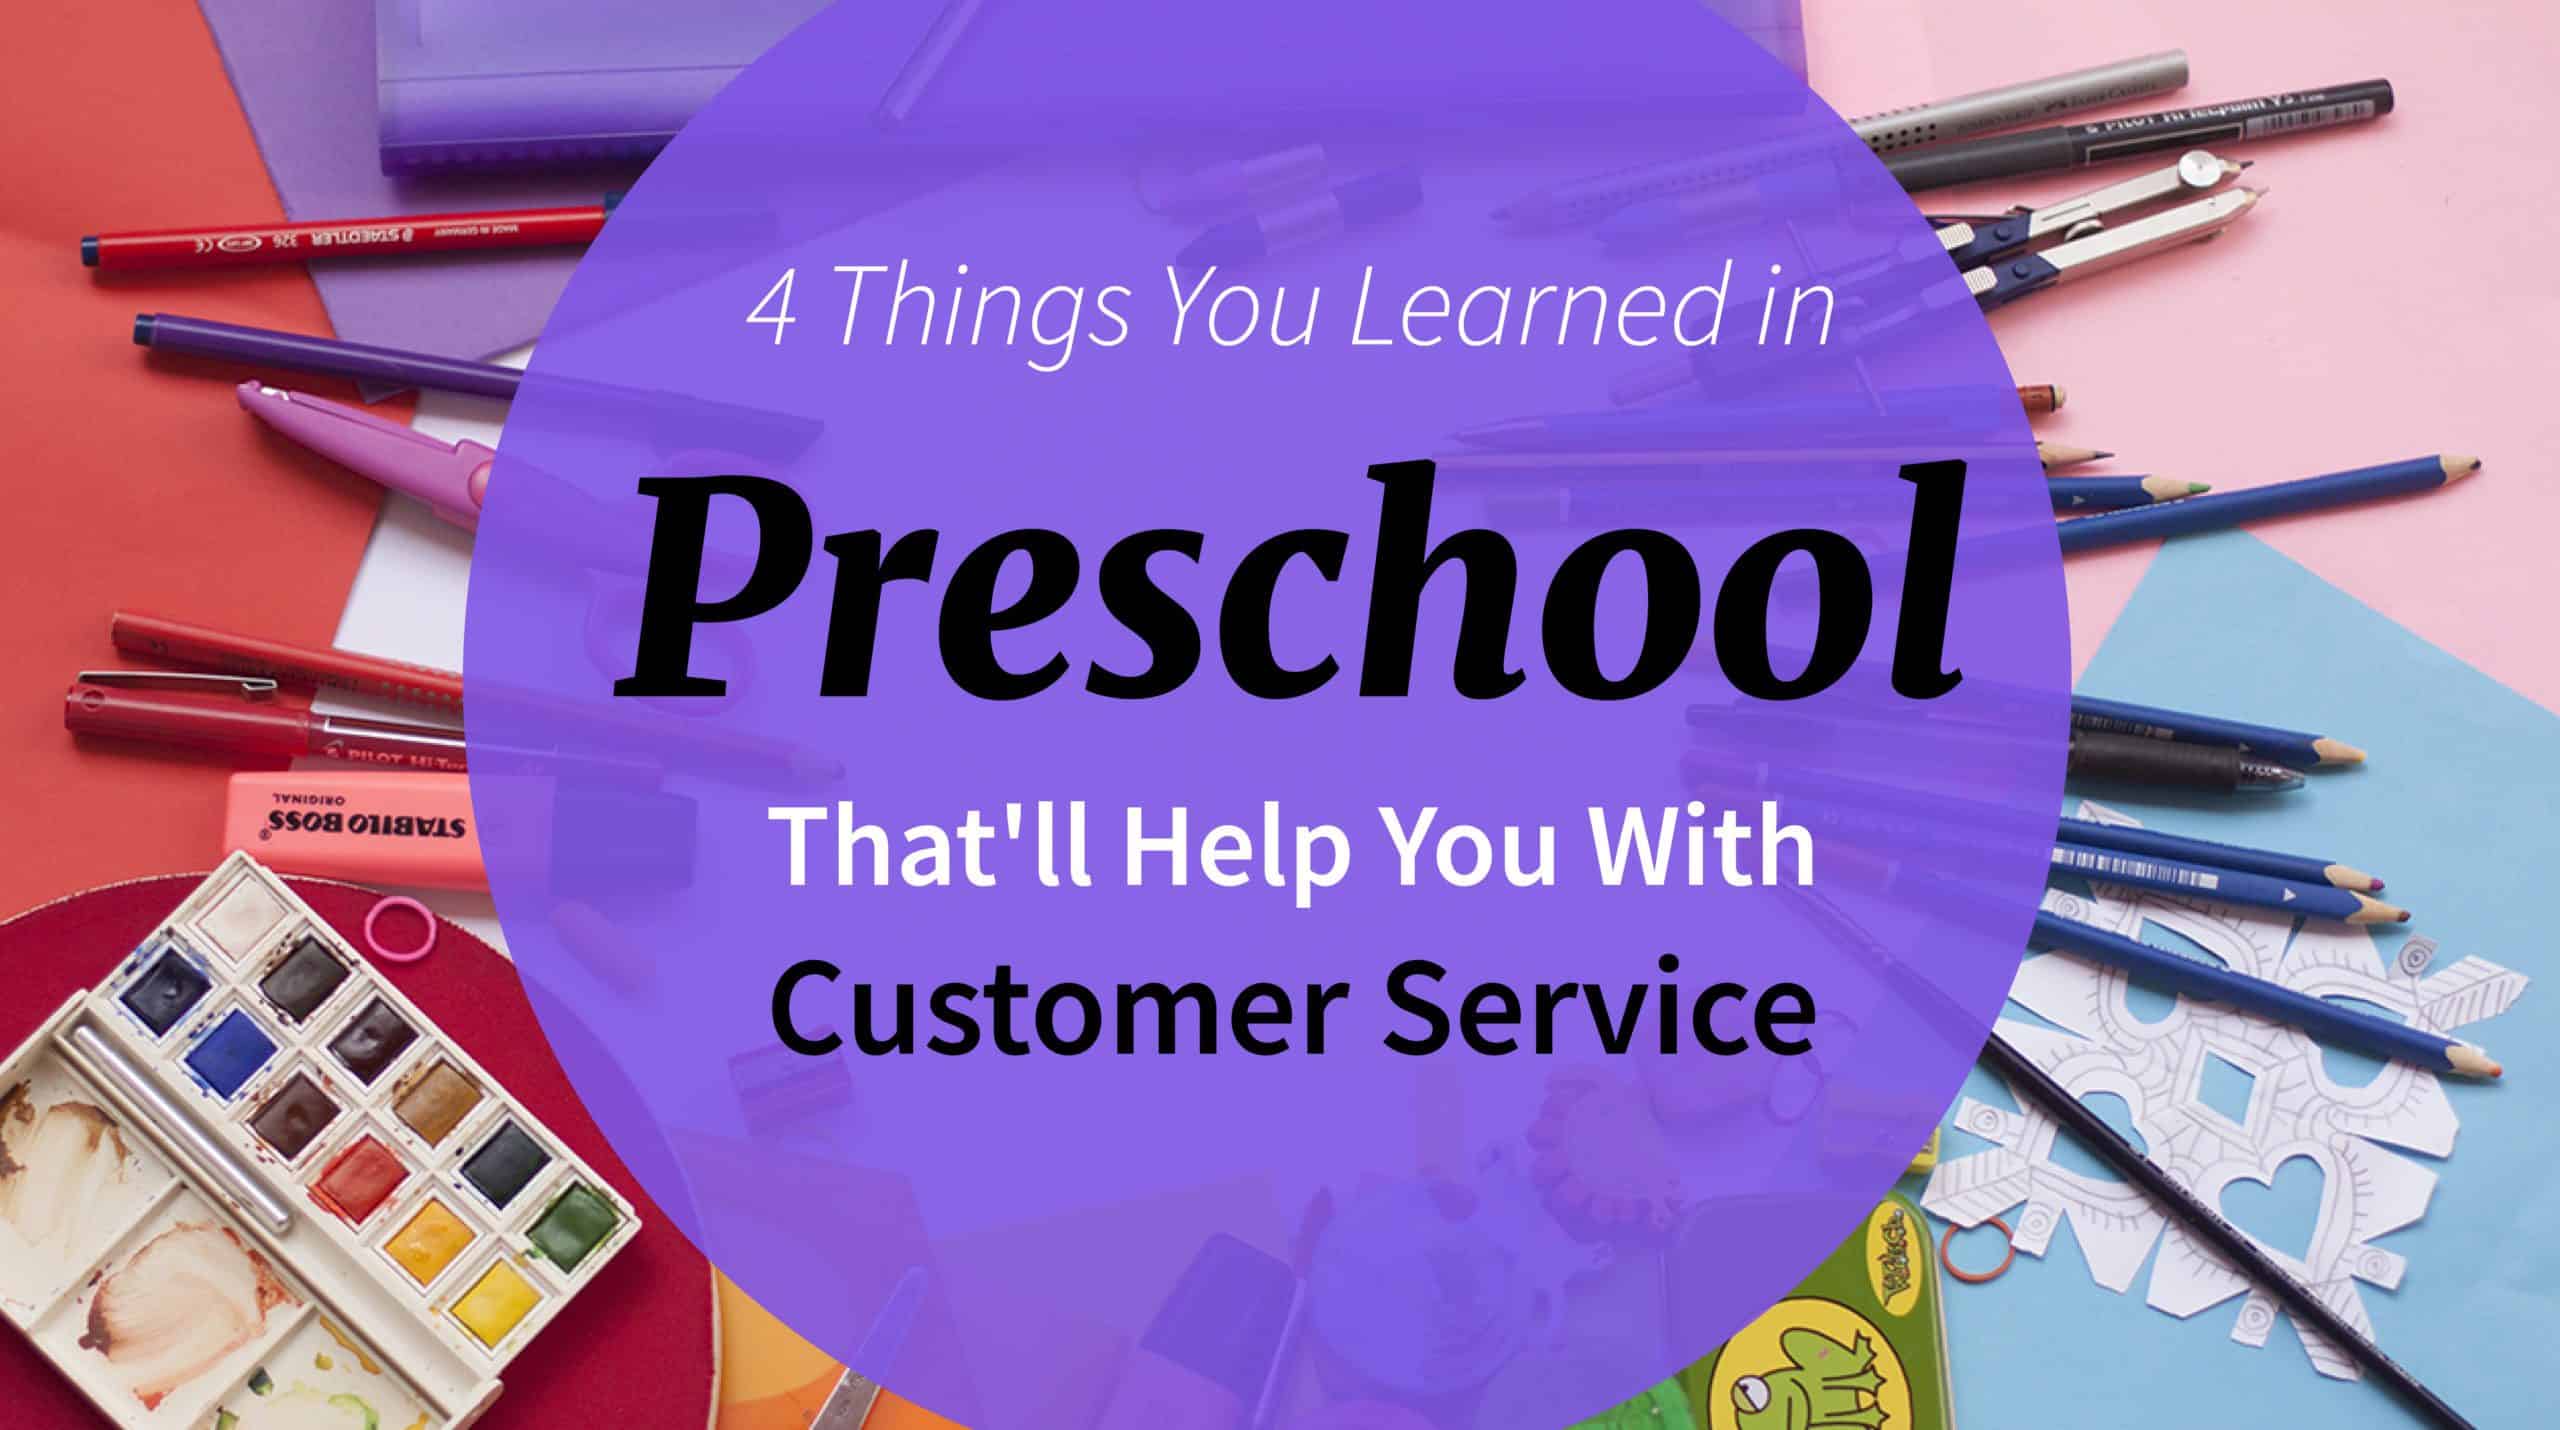 Preschool and Customer Service